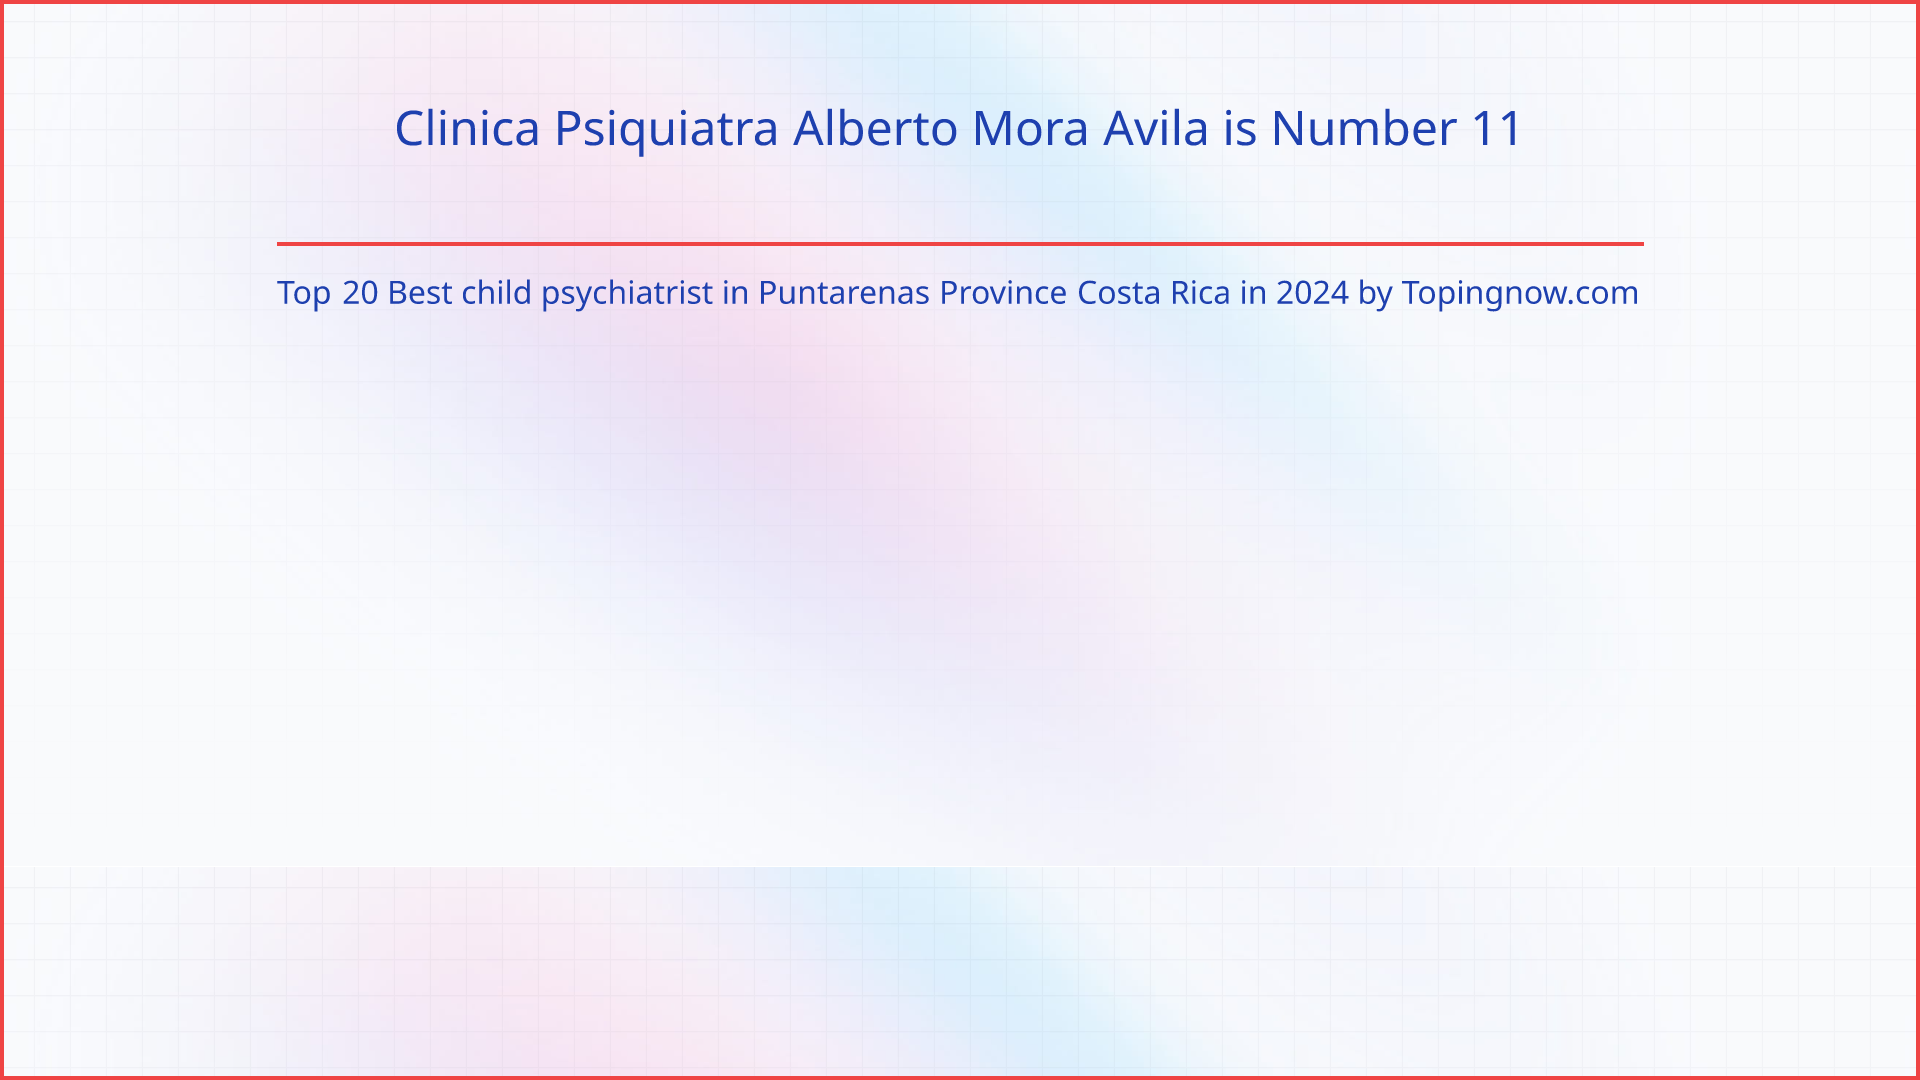 Clinica Psiquiatra Alberto Mora Avila: Top 20 Best child psychiatrist in Puntarenas Province Costa Rica in 2024